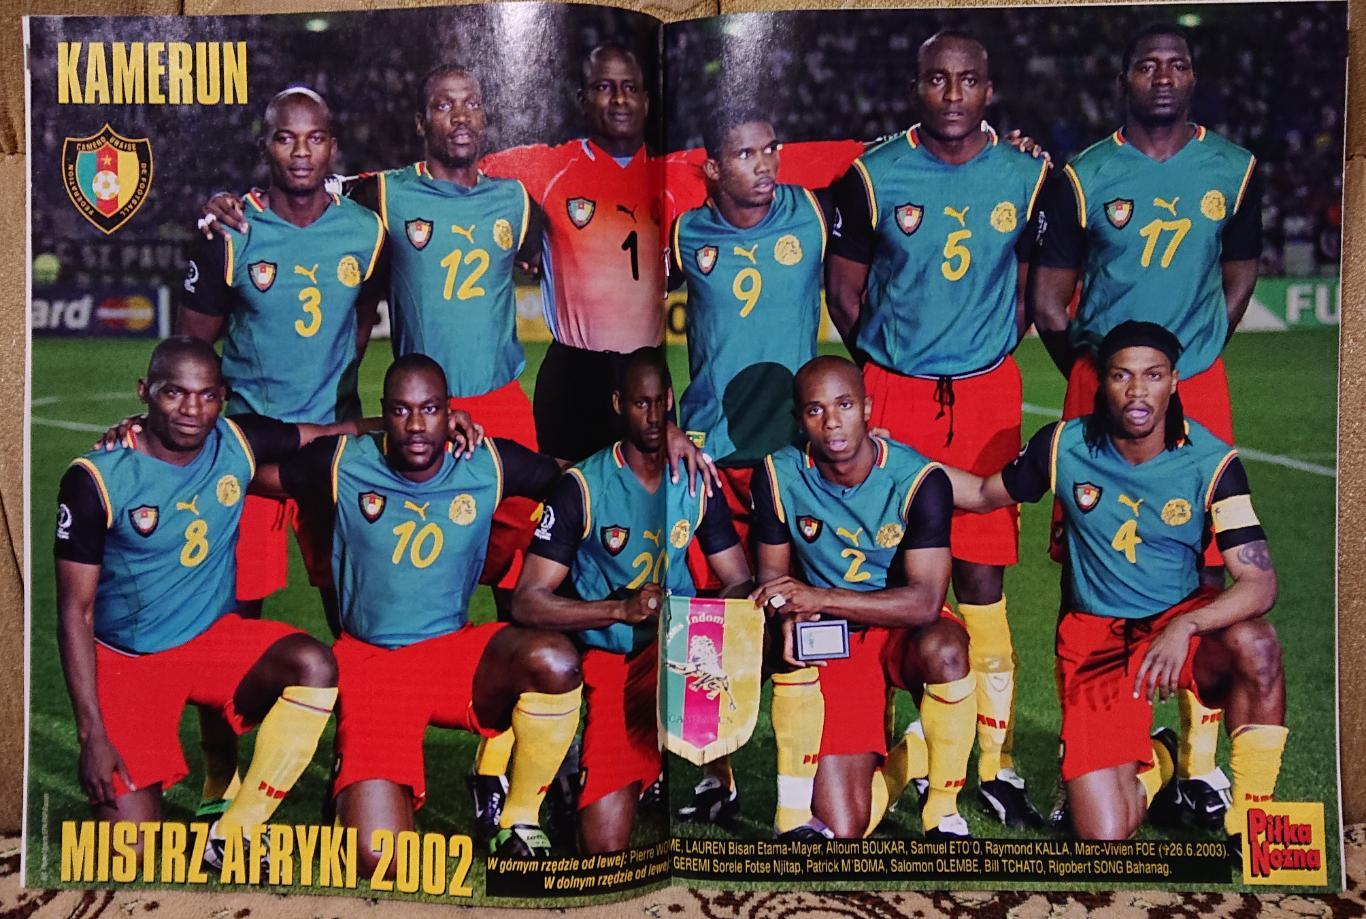 Журнал. Футбол Pilka Nozna N4/2004.Постер Камерун. 1